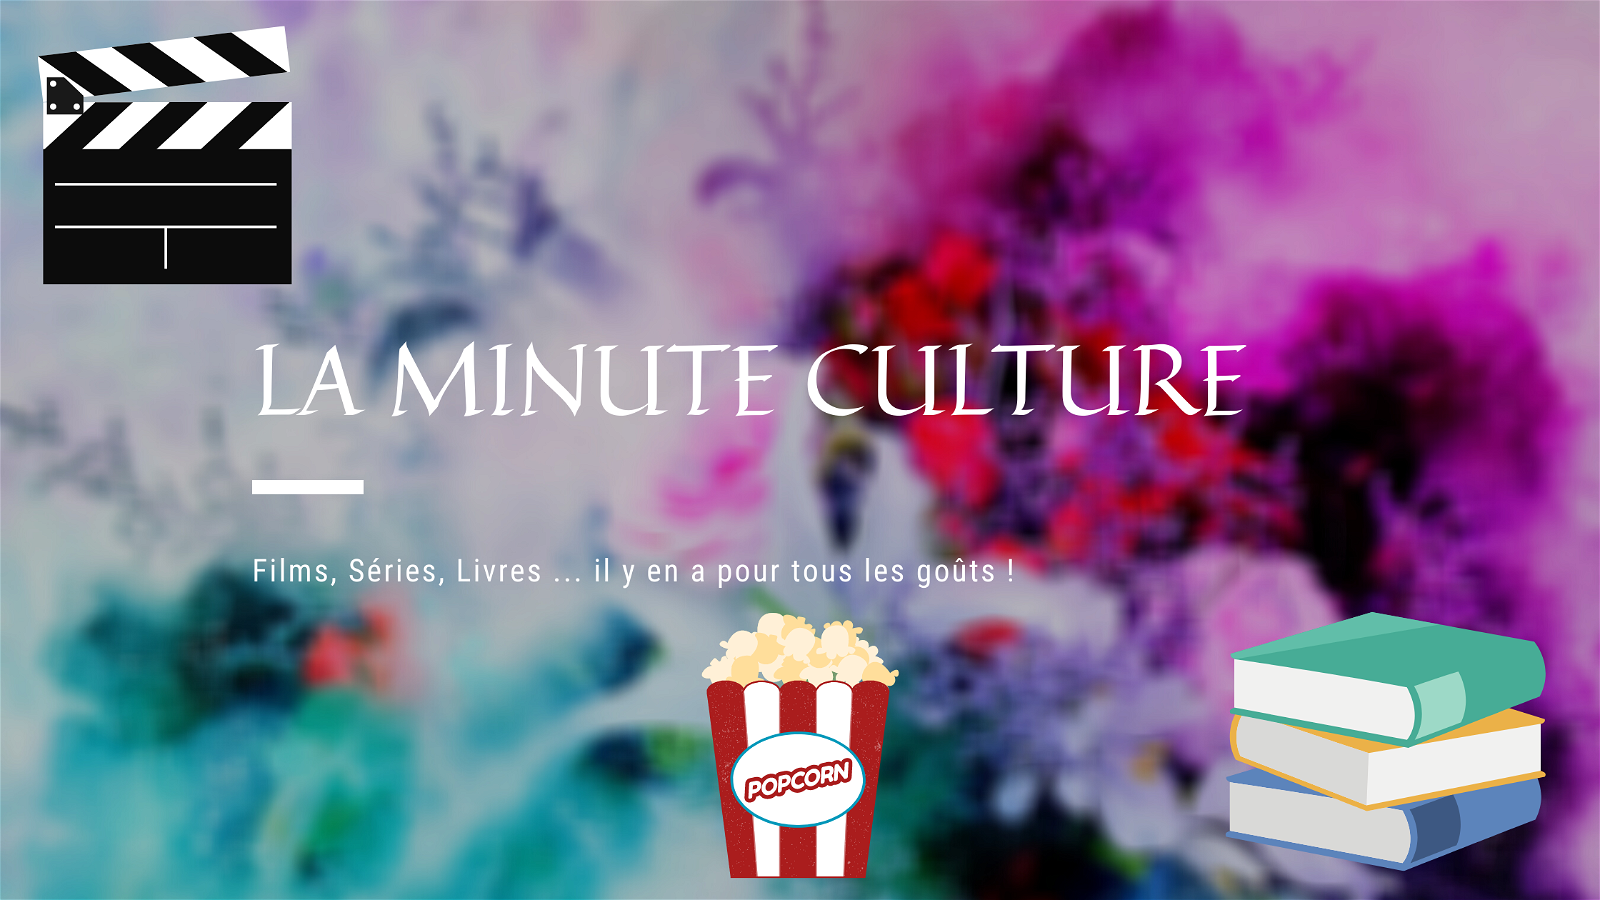 La minute culture - épisode 7